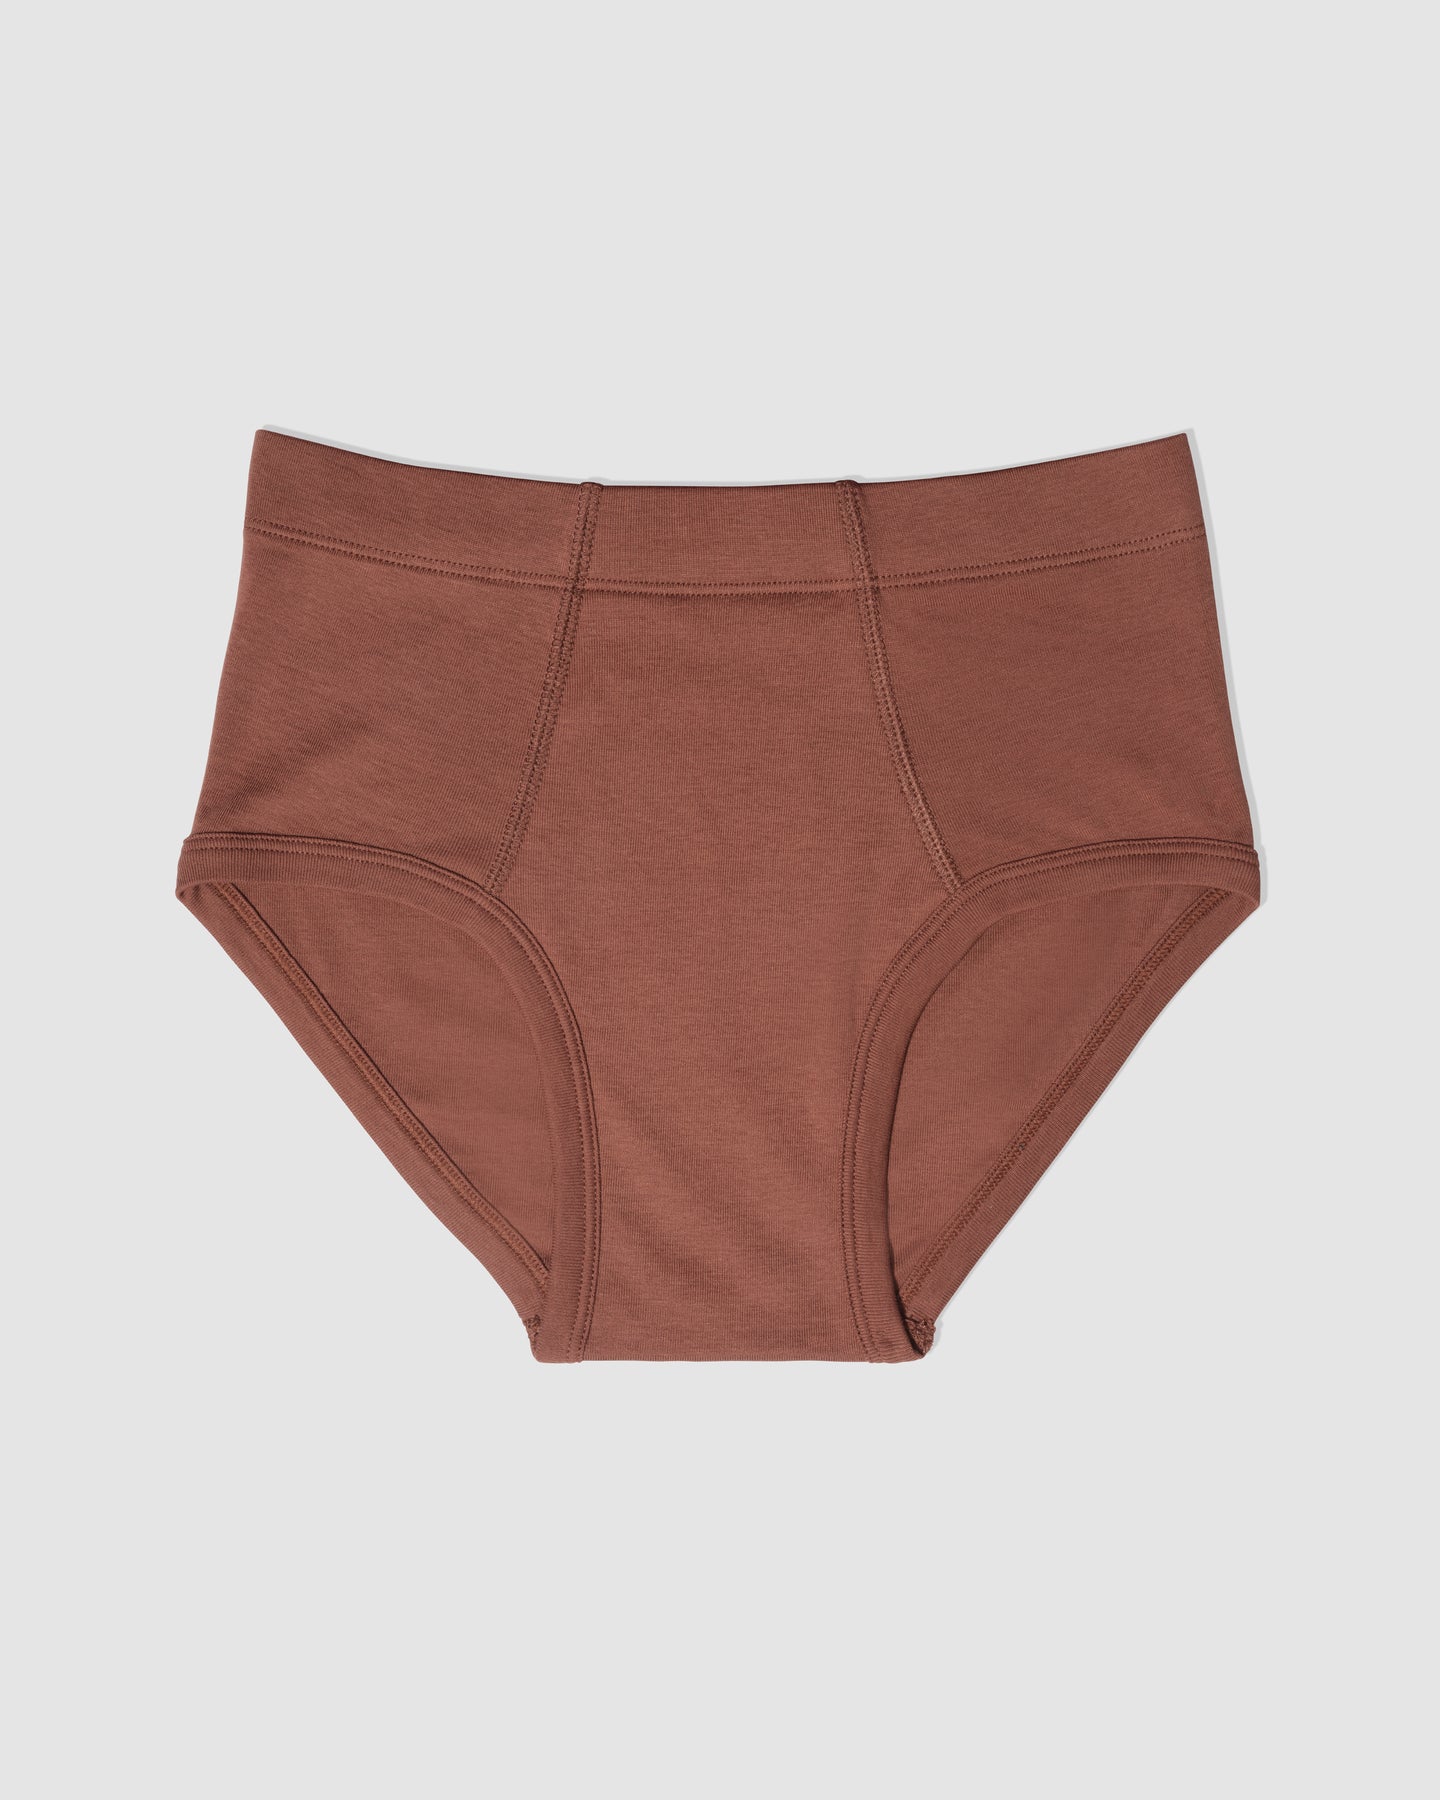 brief − 100% organic. classic cotton brief underwear, oddobody